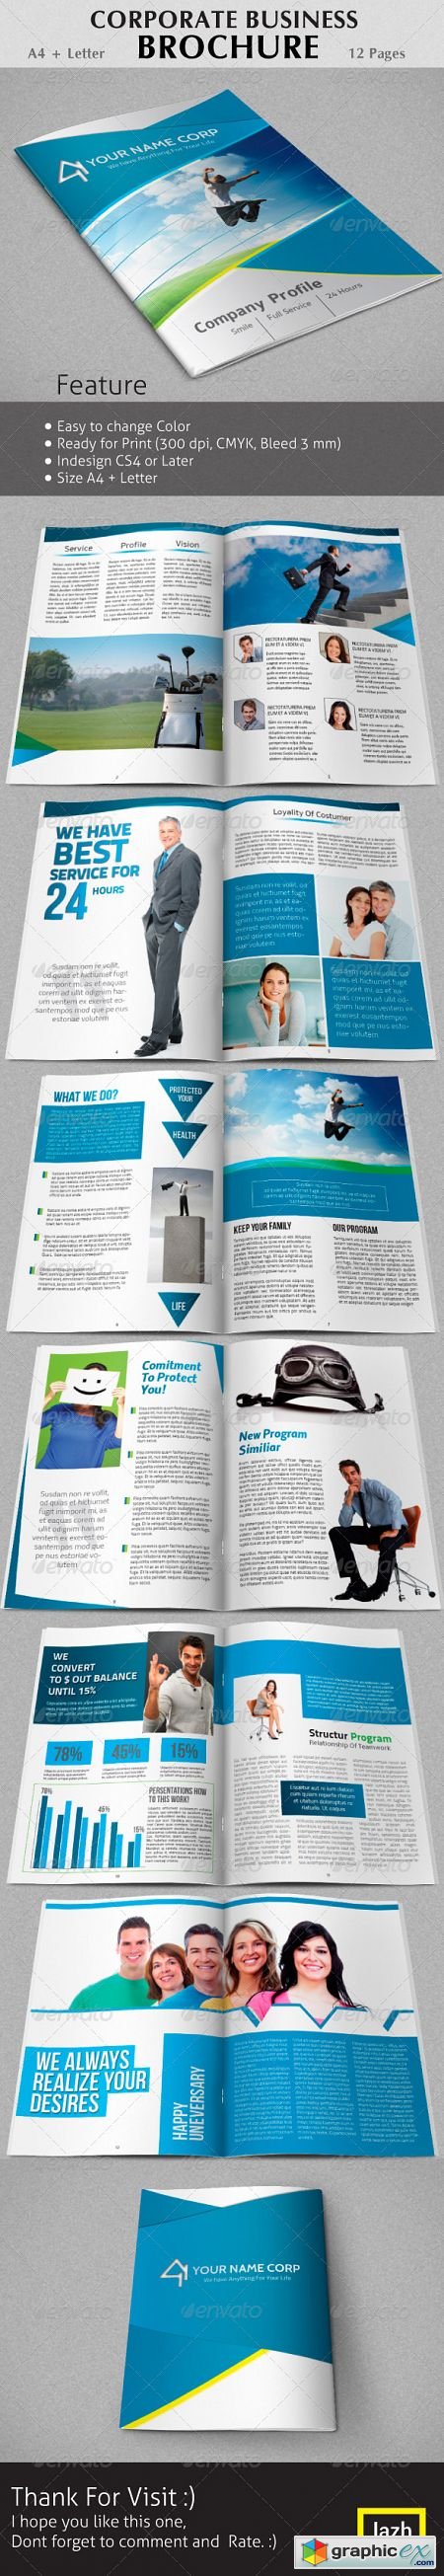 Professional Corporate Business Brochure